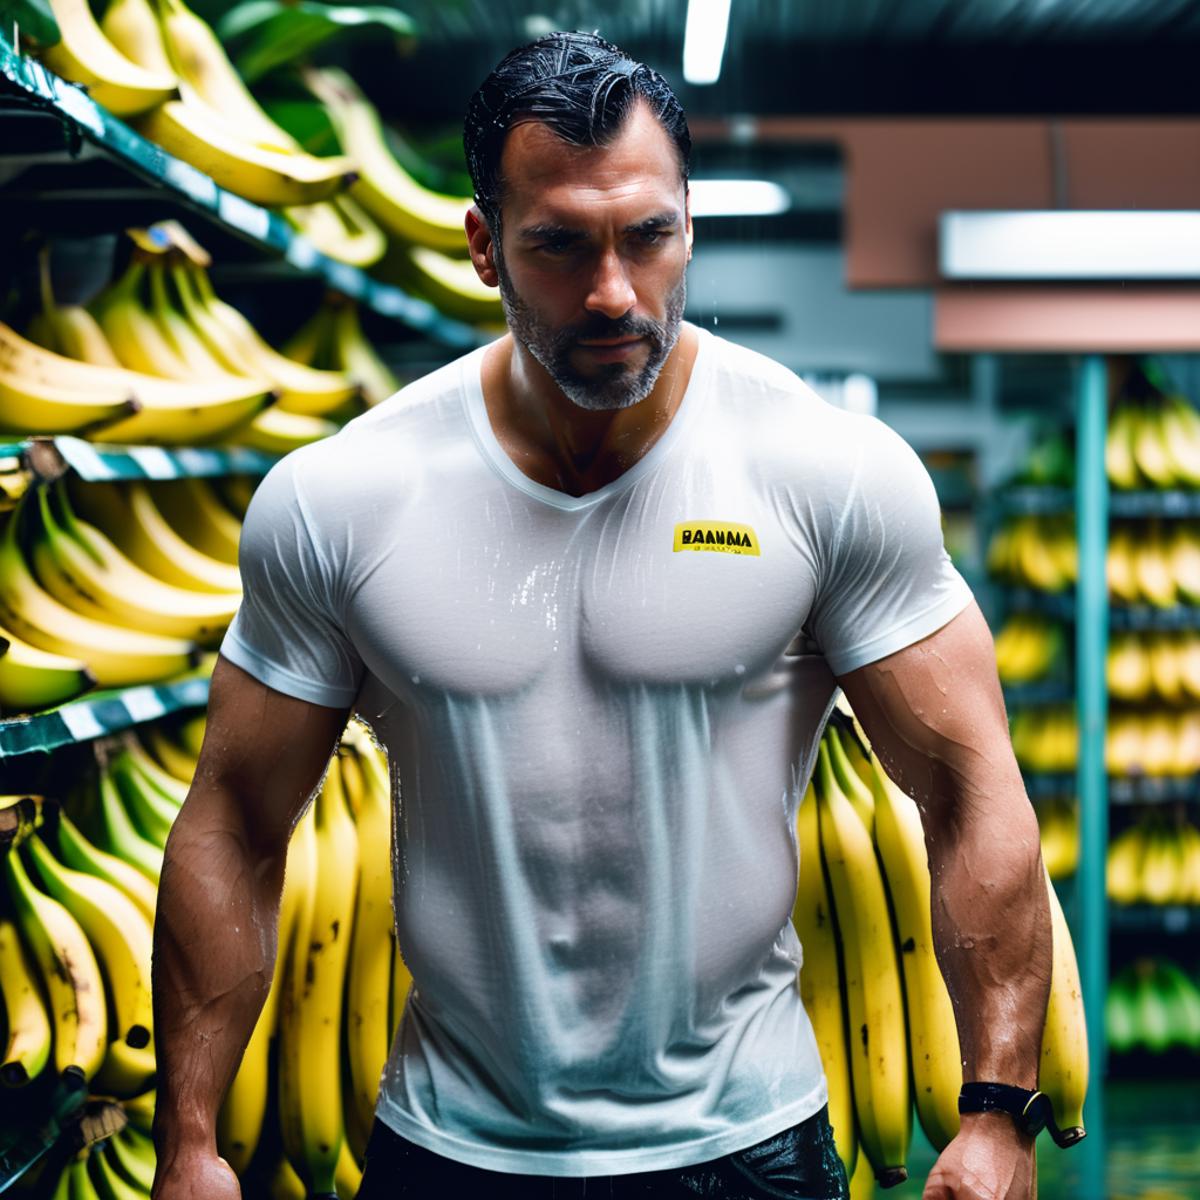 Man wearing a Banana shirt standing in front of a wall of bananas.